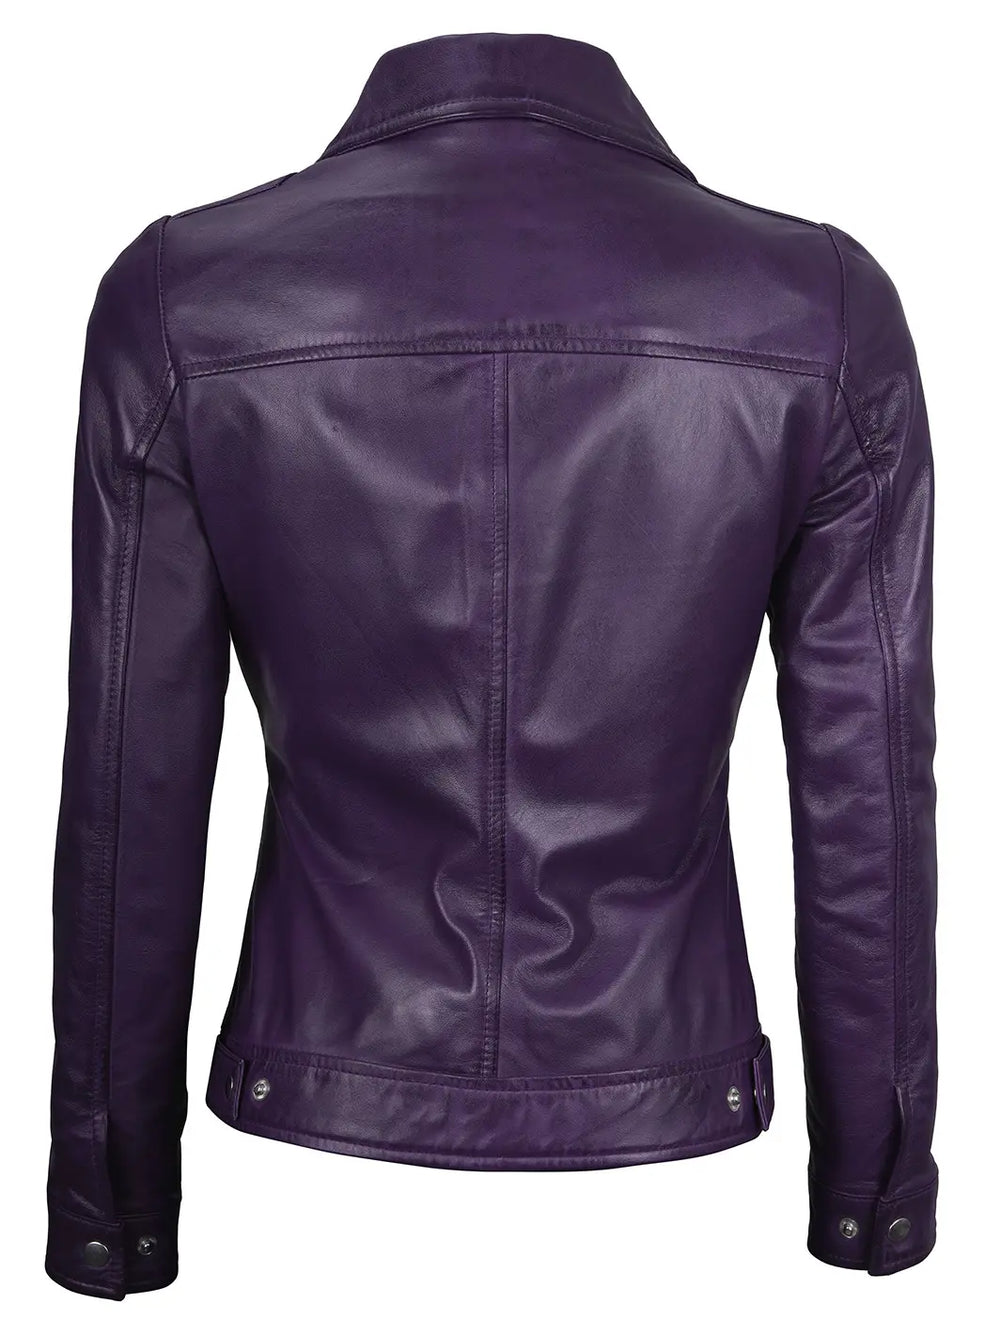 Womens purple leather jacket